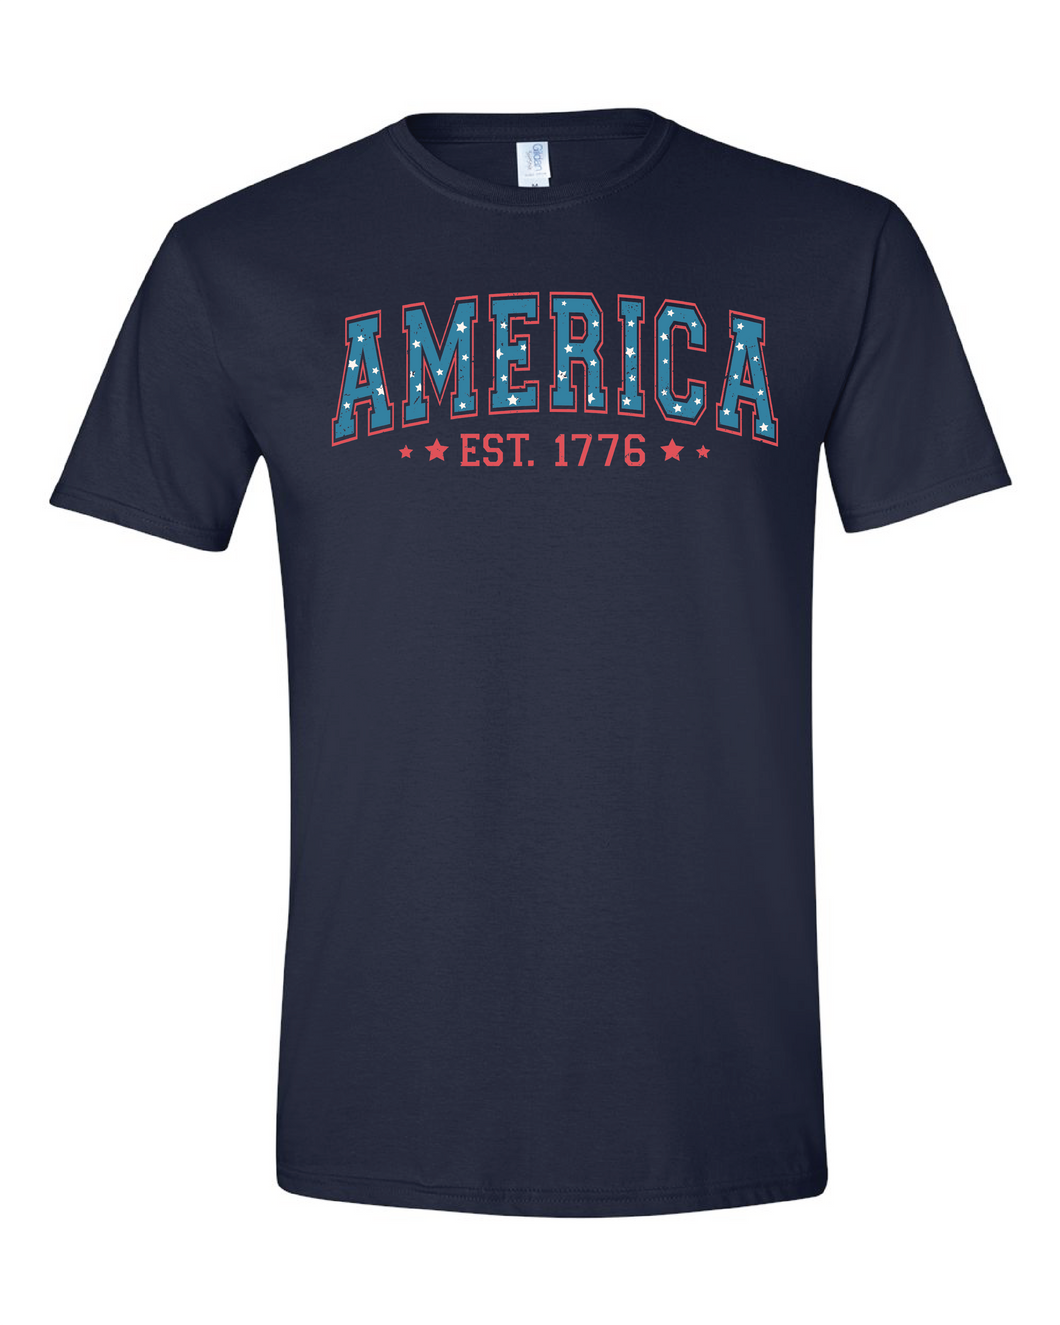 America Tshirt - Navy